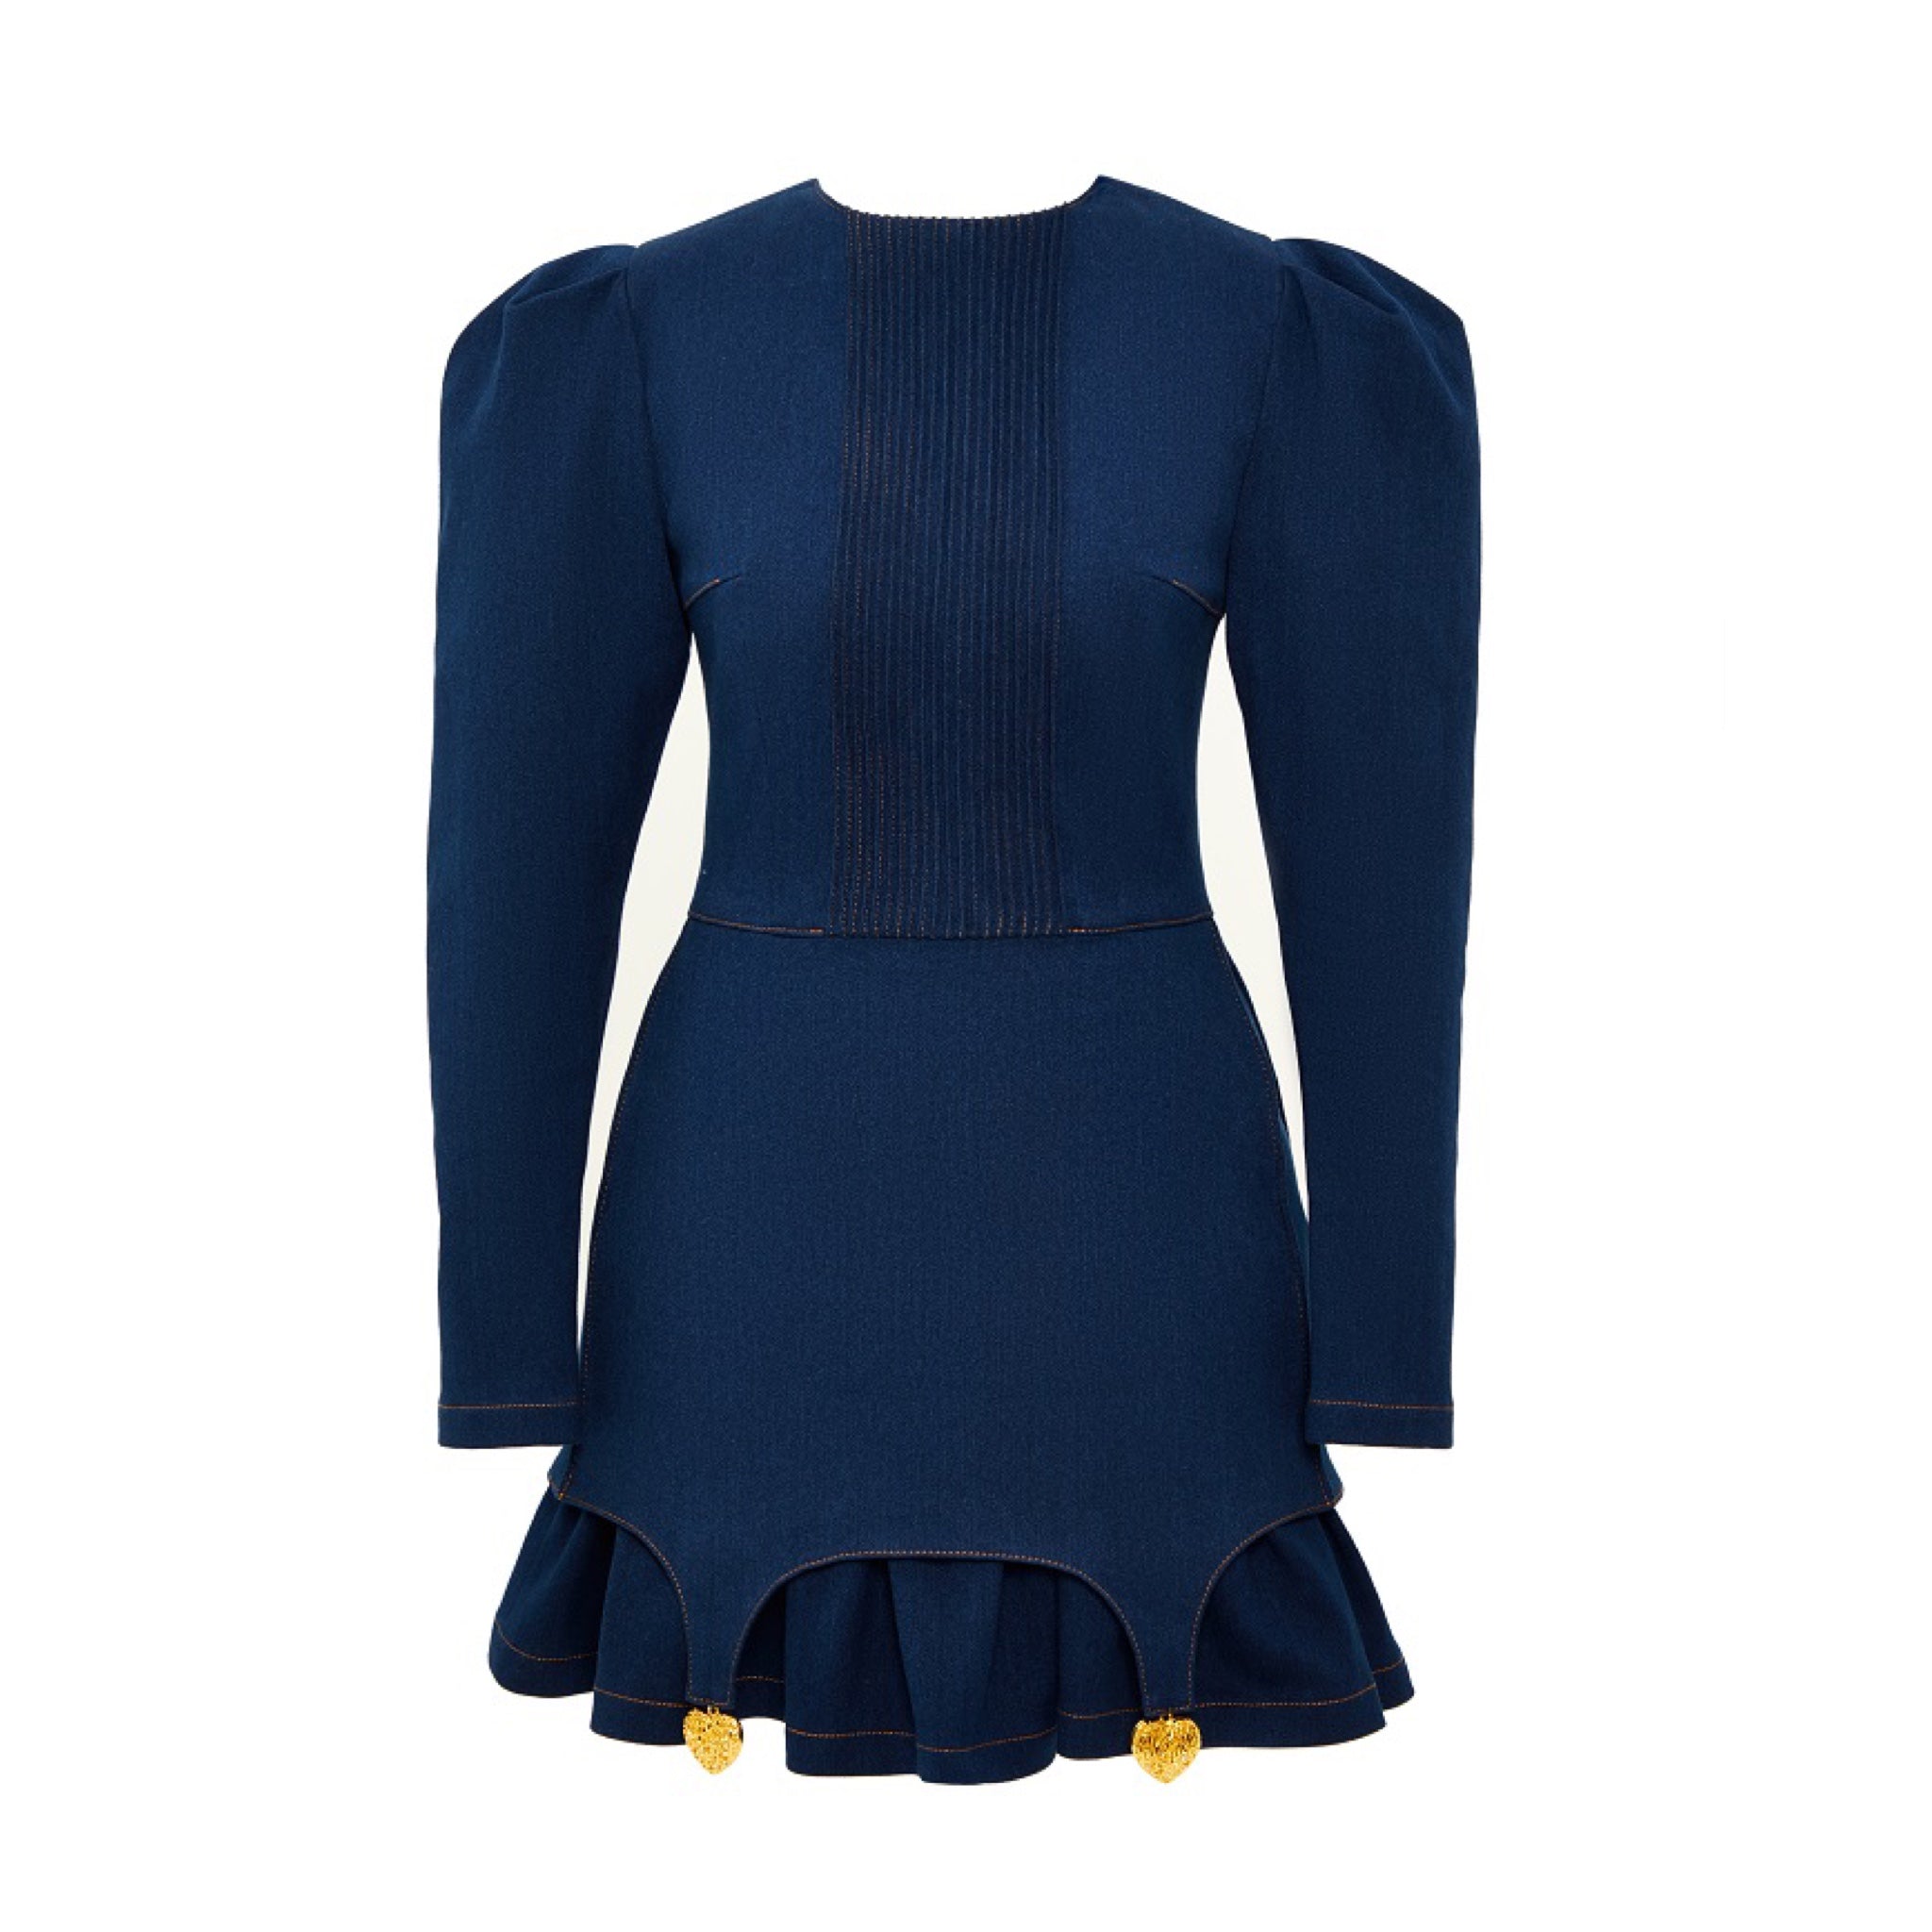 Ruffle Trim Button Up Dress, Denim - New Arrivals - The Blue Door Boutique